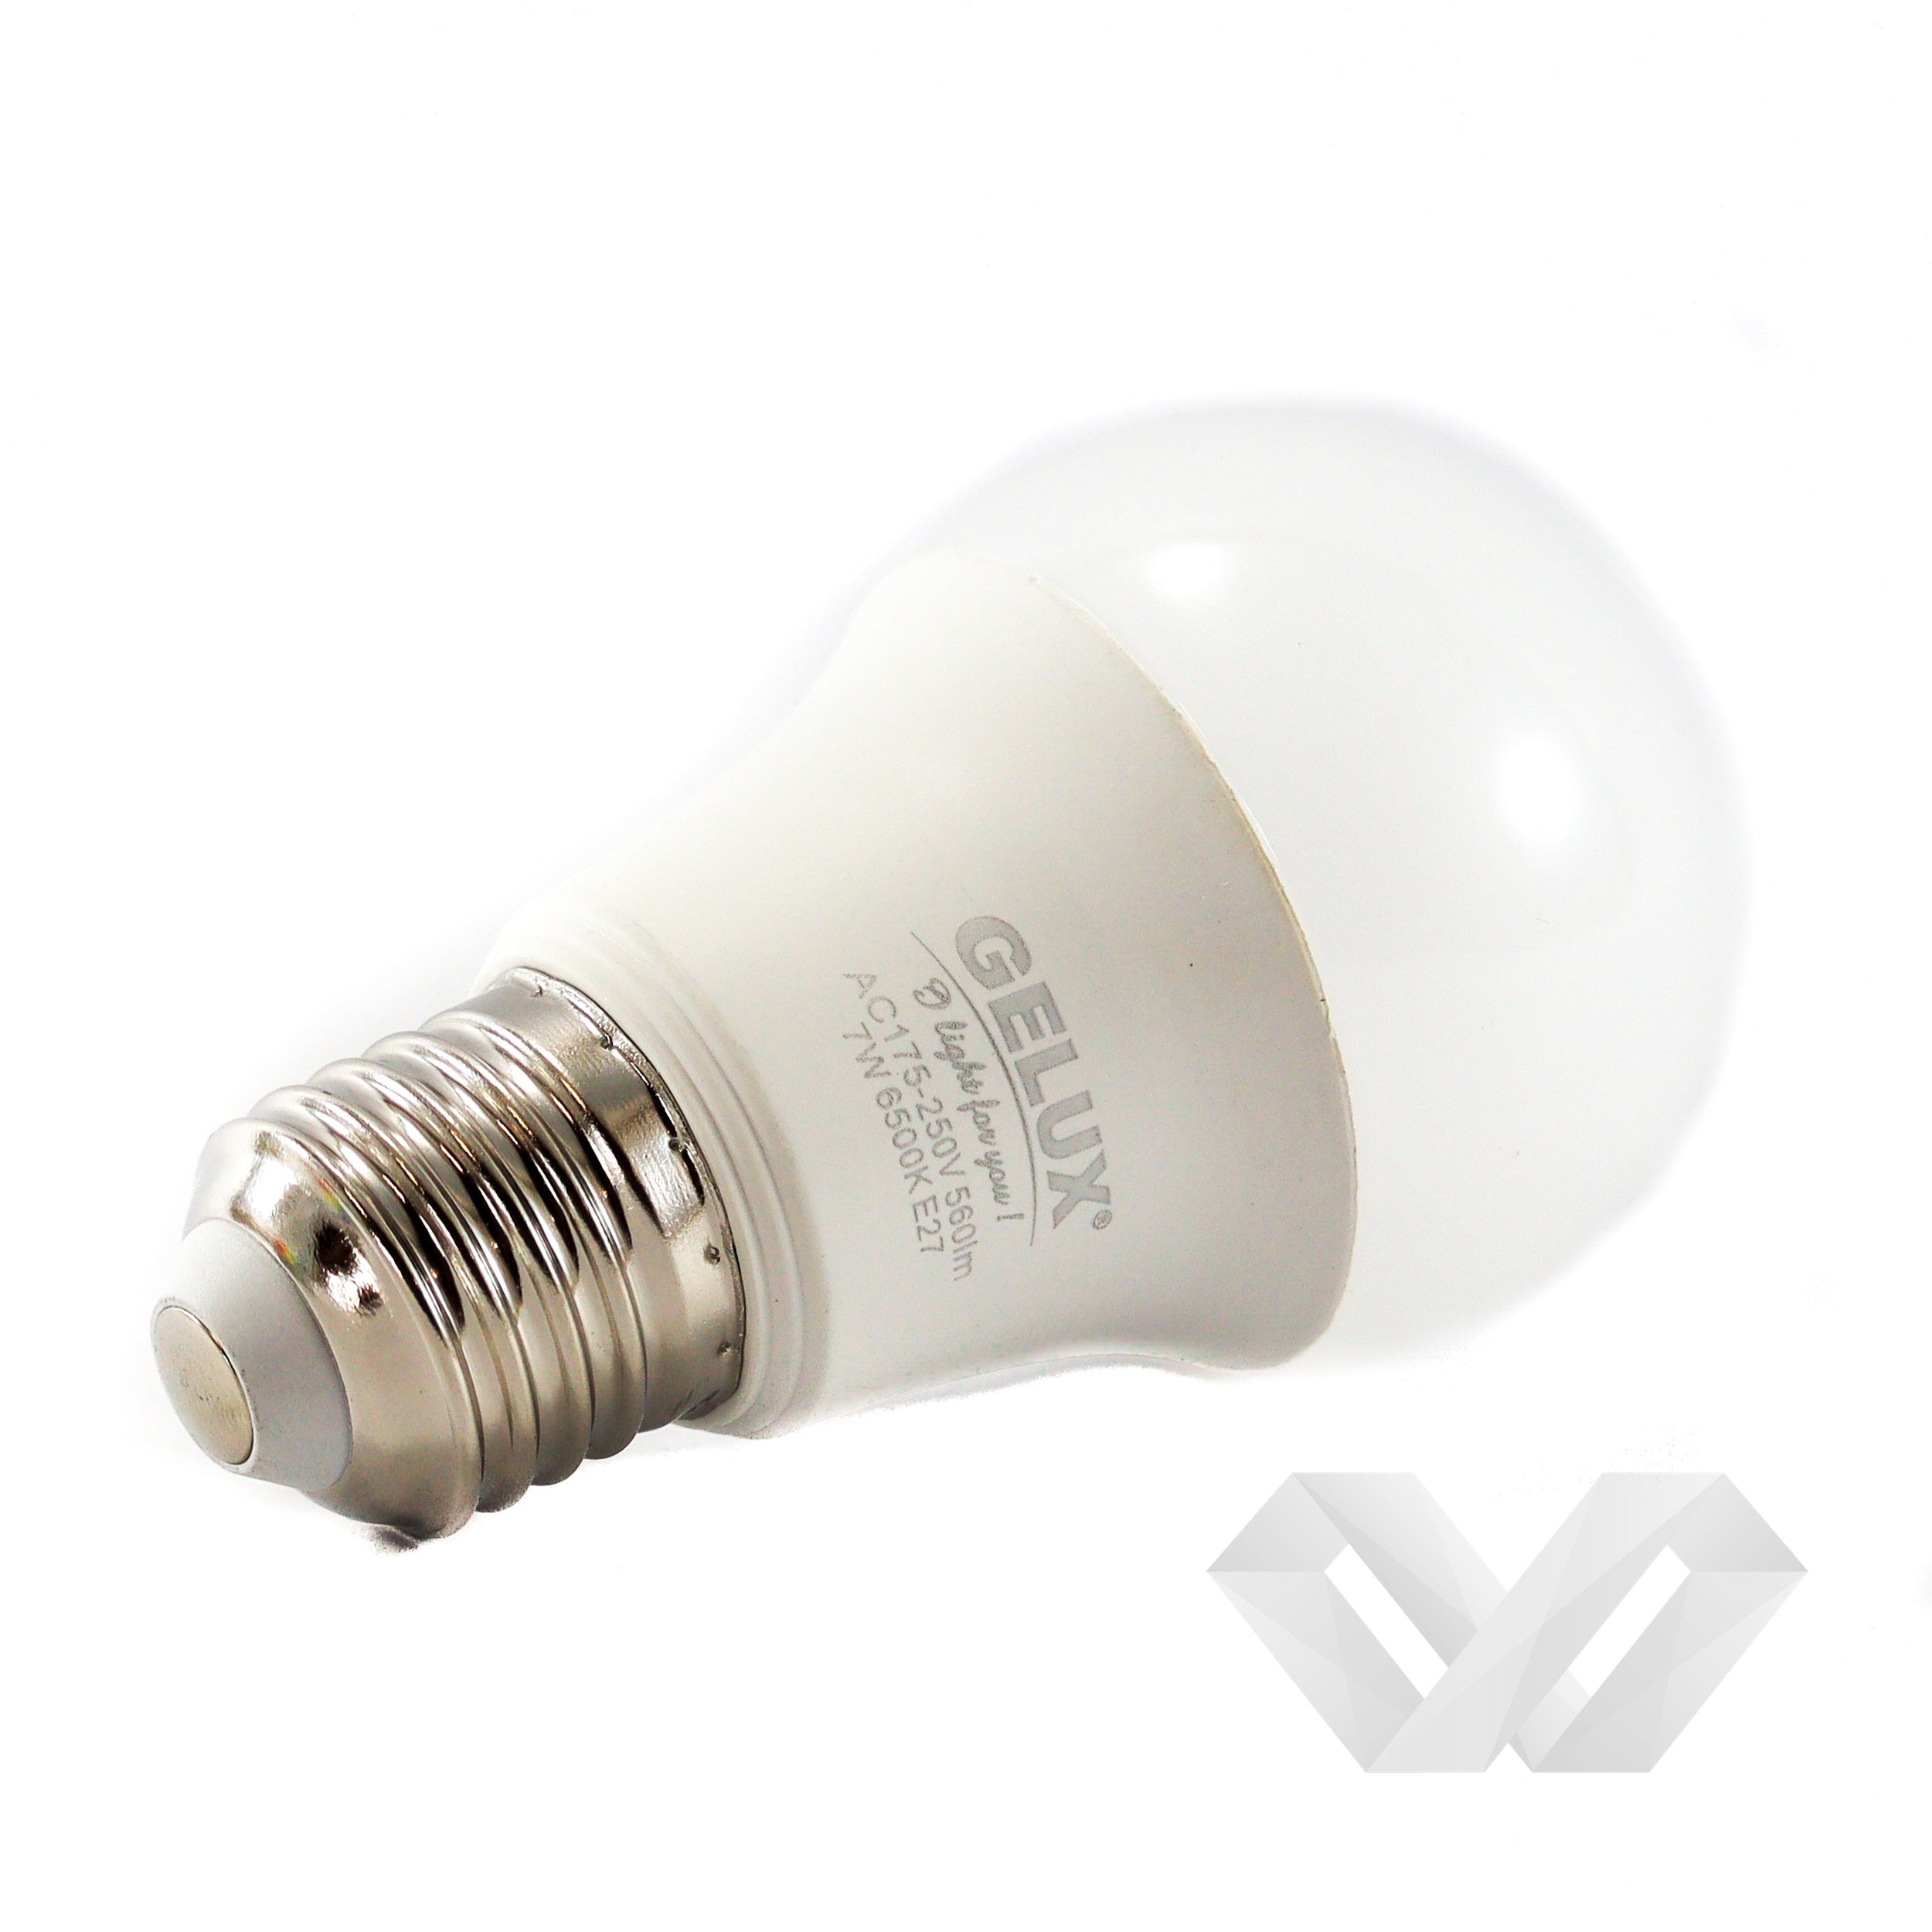 Bec LED 9W E27 Standard ECOLED, echivalent 72W lumină rece, Gelux